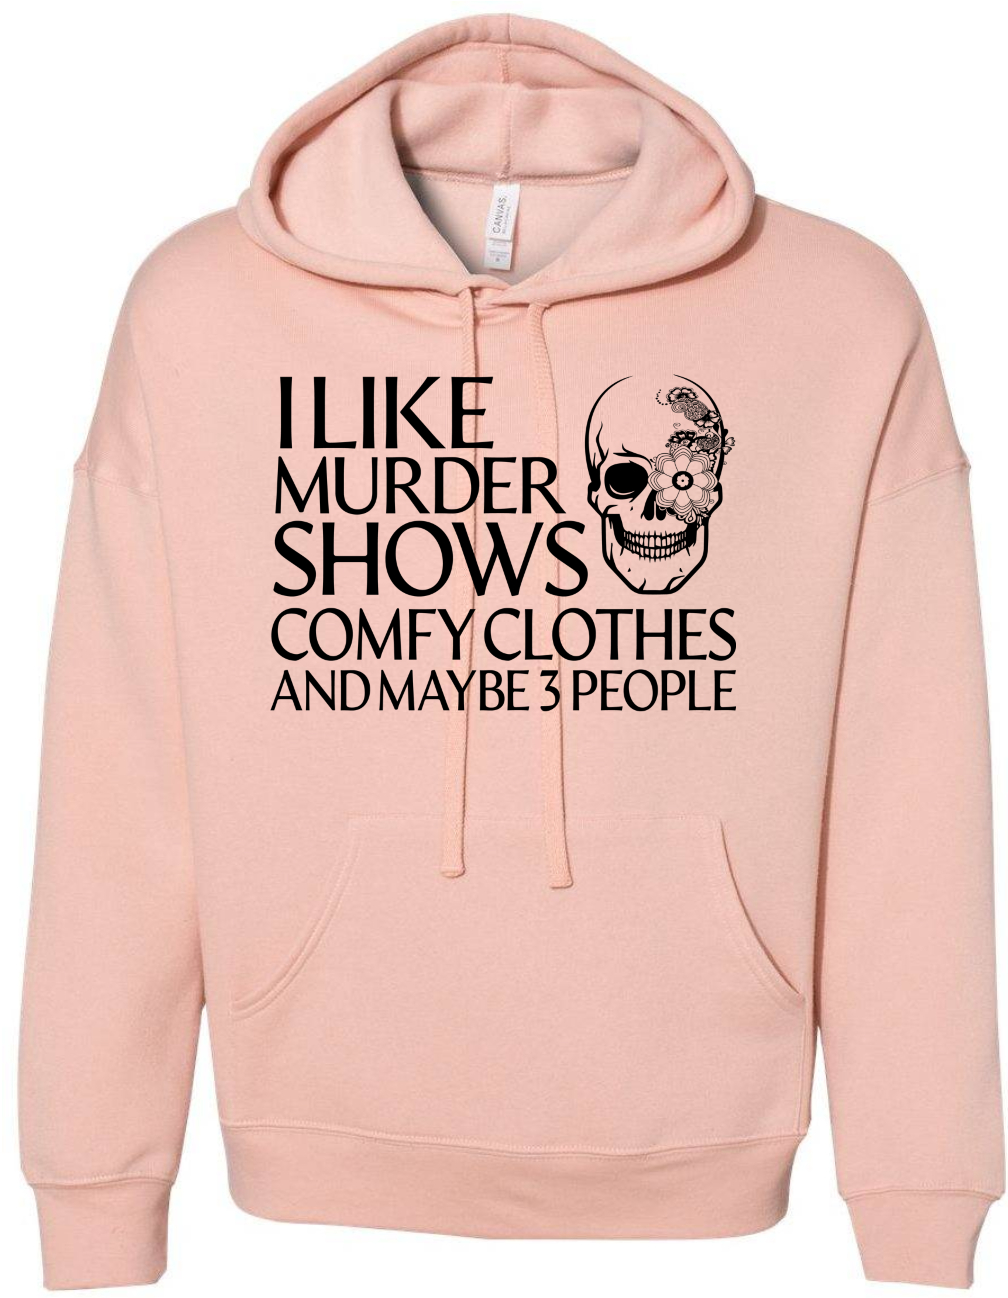 Murder shows, Comfy clothes